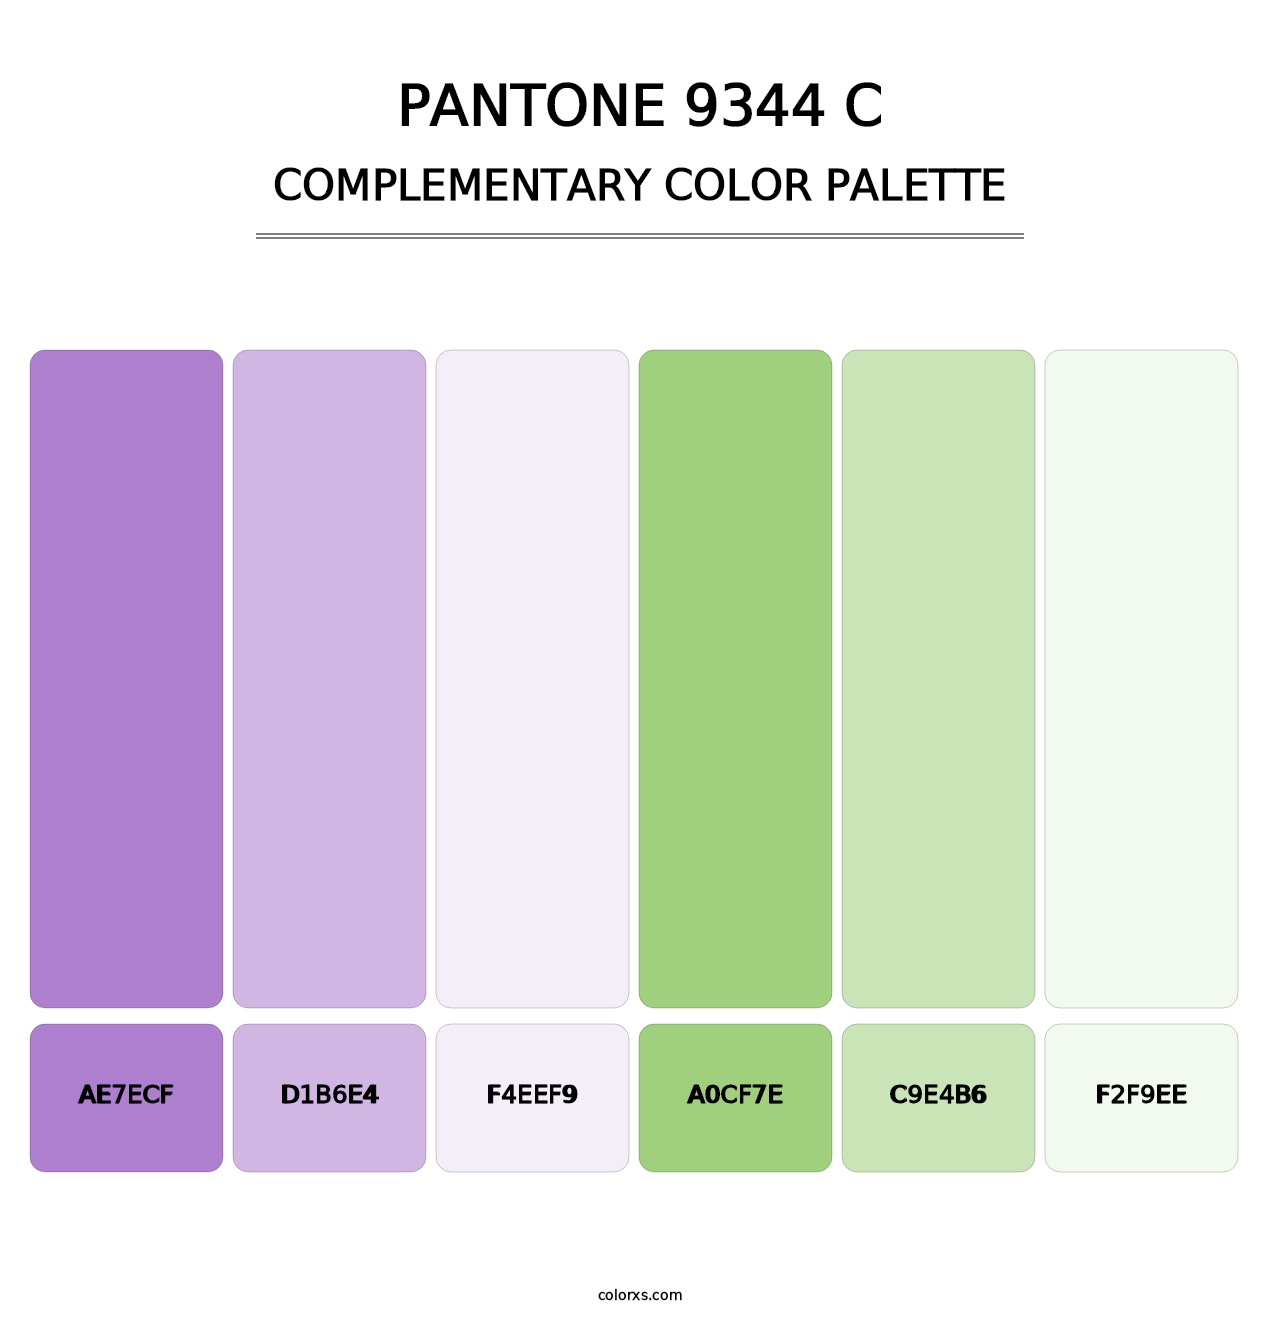 PANTONE 9344 C - Complementary Color Palette